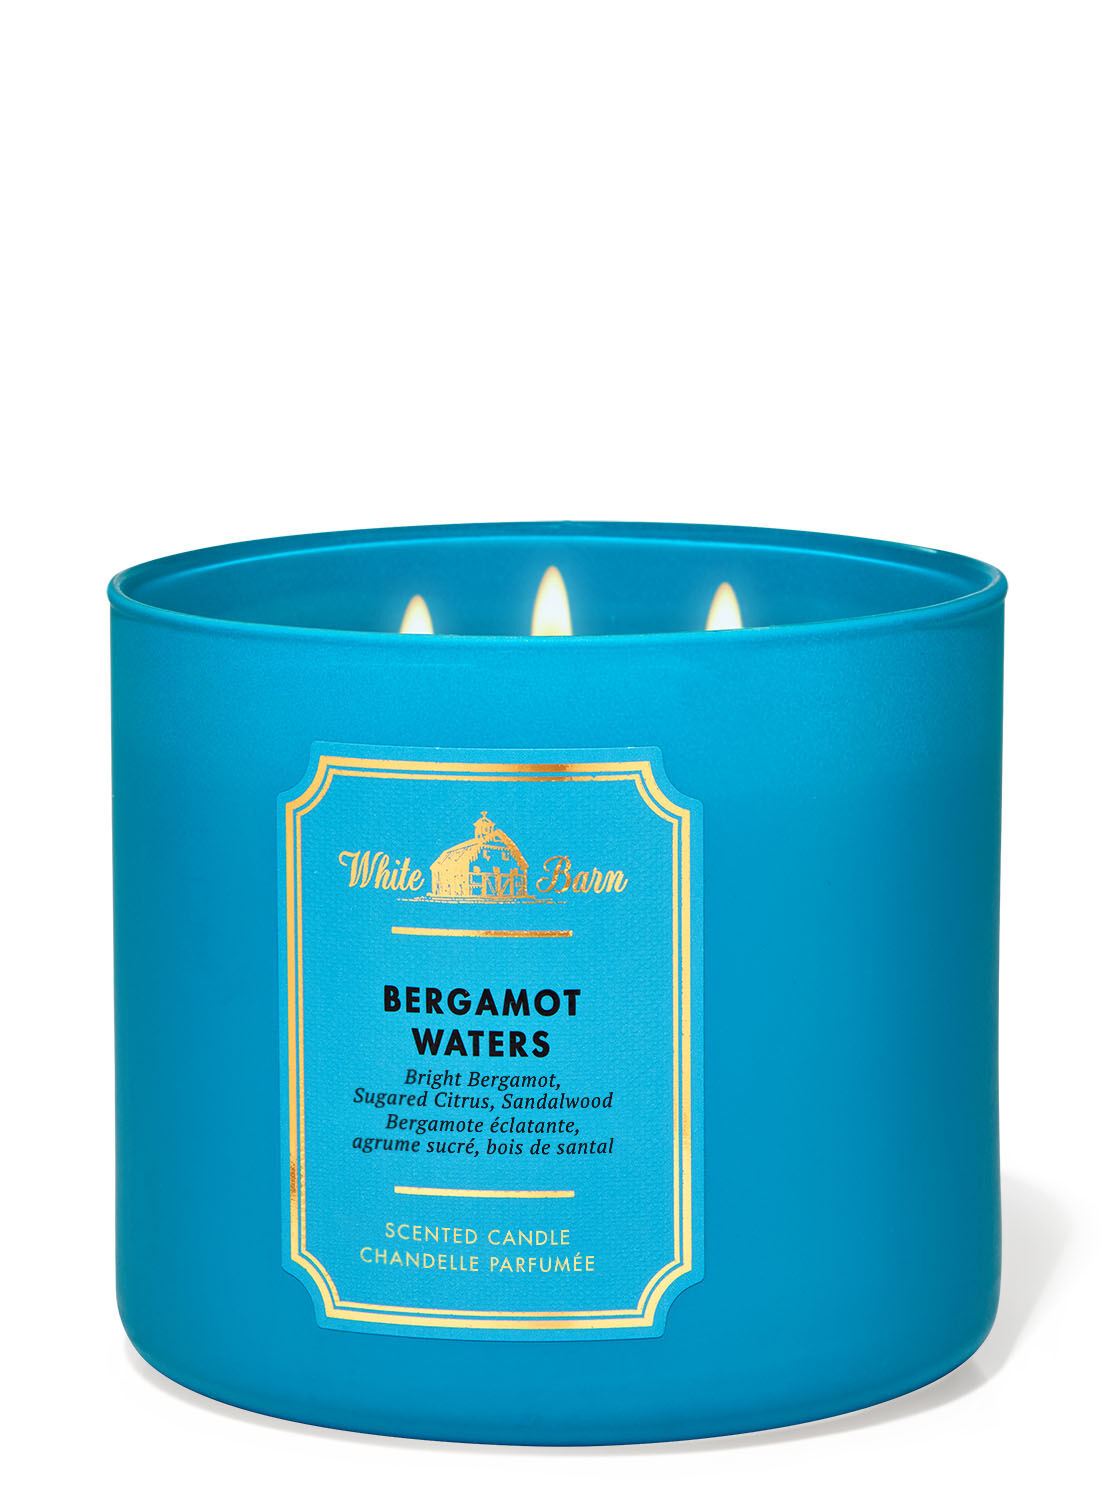 Bath & Body Works 3-Wick Candle in Bergamot Waters